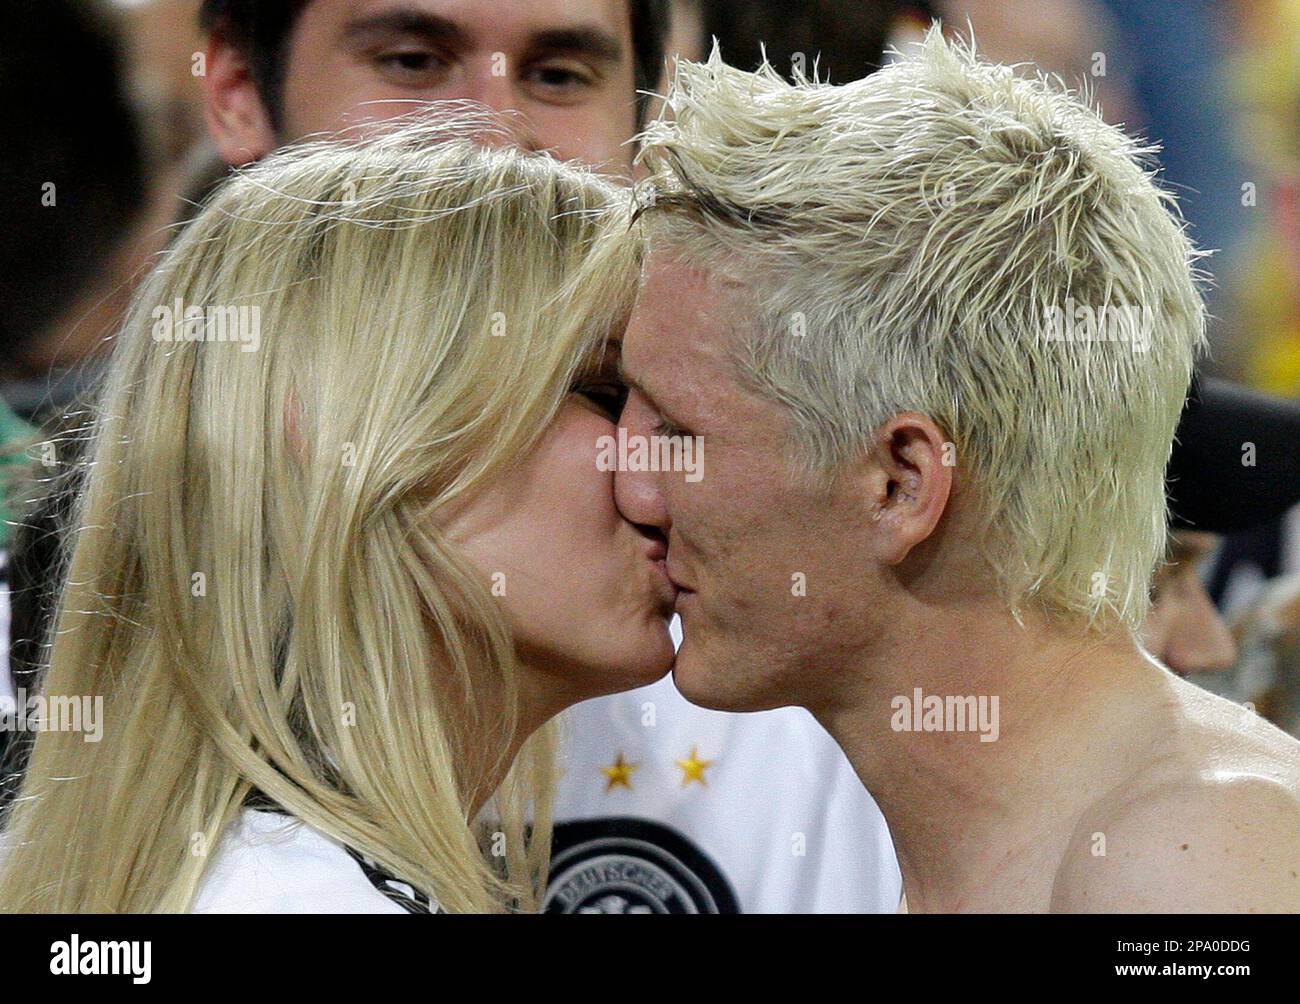 germanys-bastian-schweinsteiger-right-kisses-his-girlfriend-sarah-brandner-after-the-quarterfi...jpg